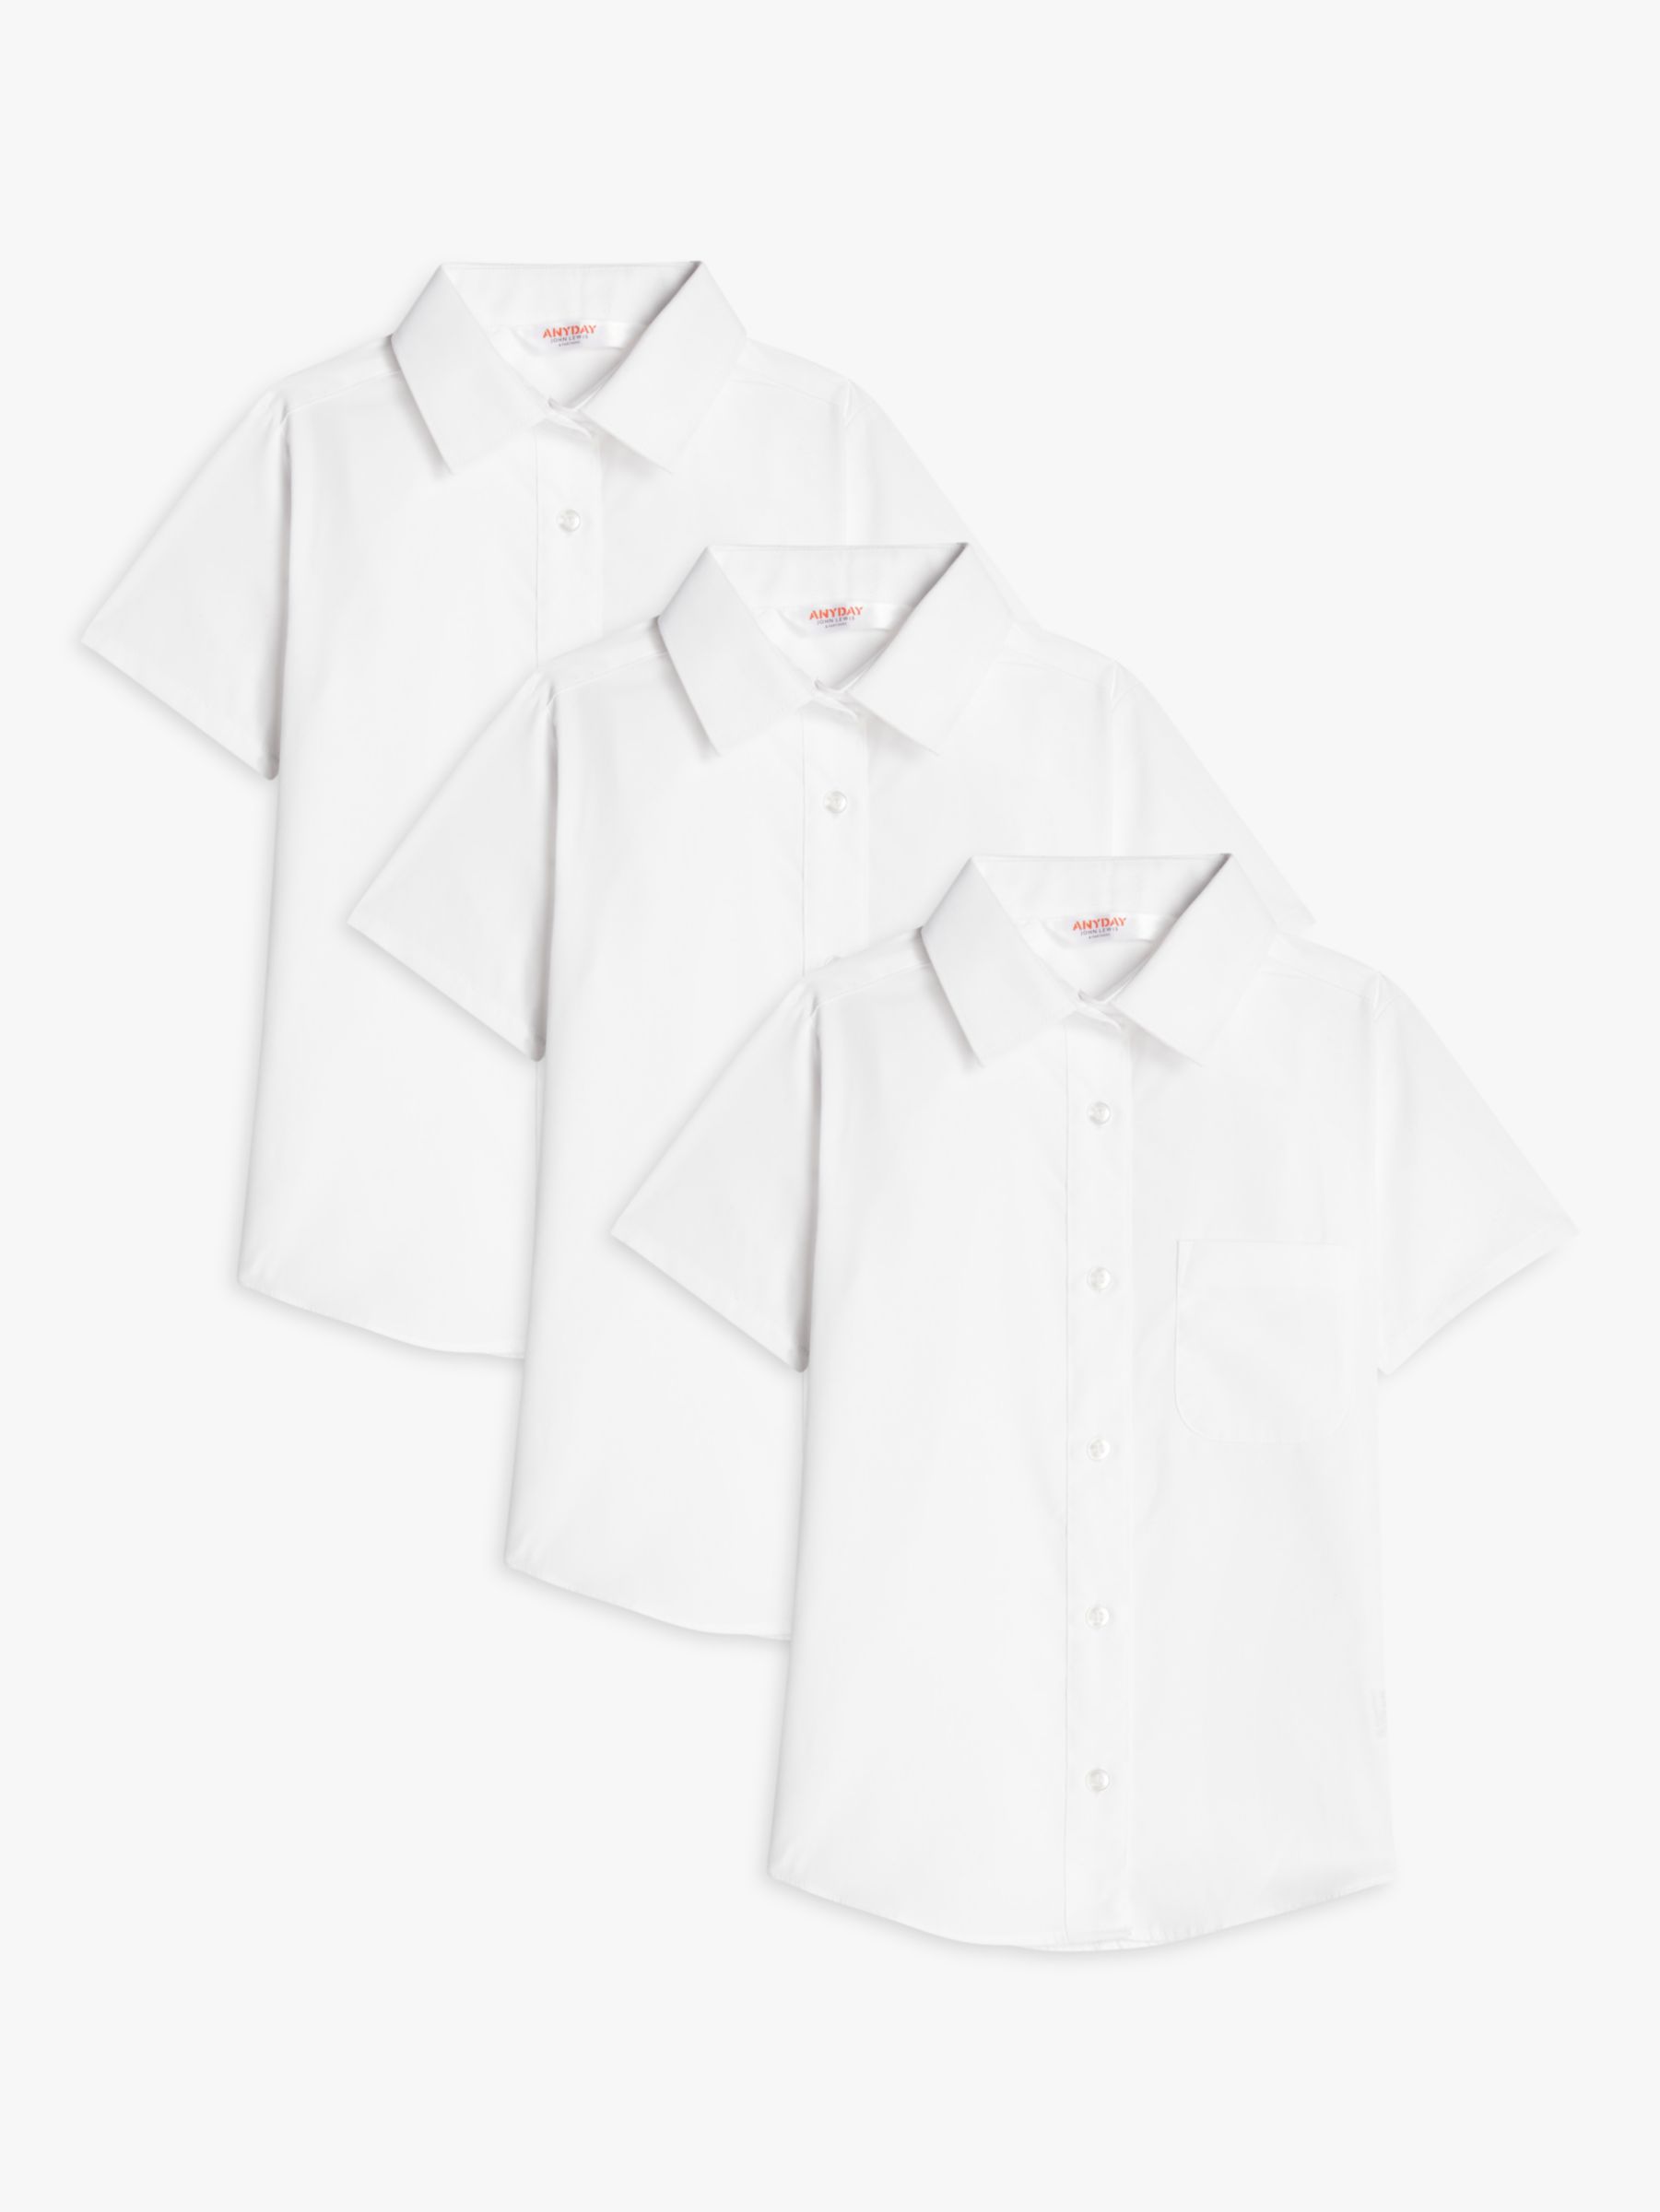 John Lewis Kids' Thermal Short Sleeve Top, Pack of 2, White at